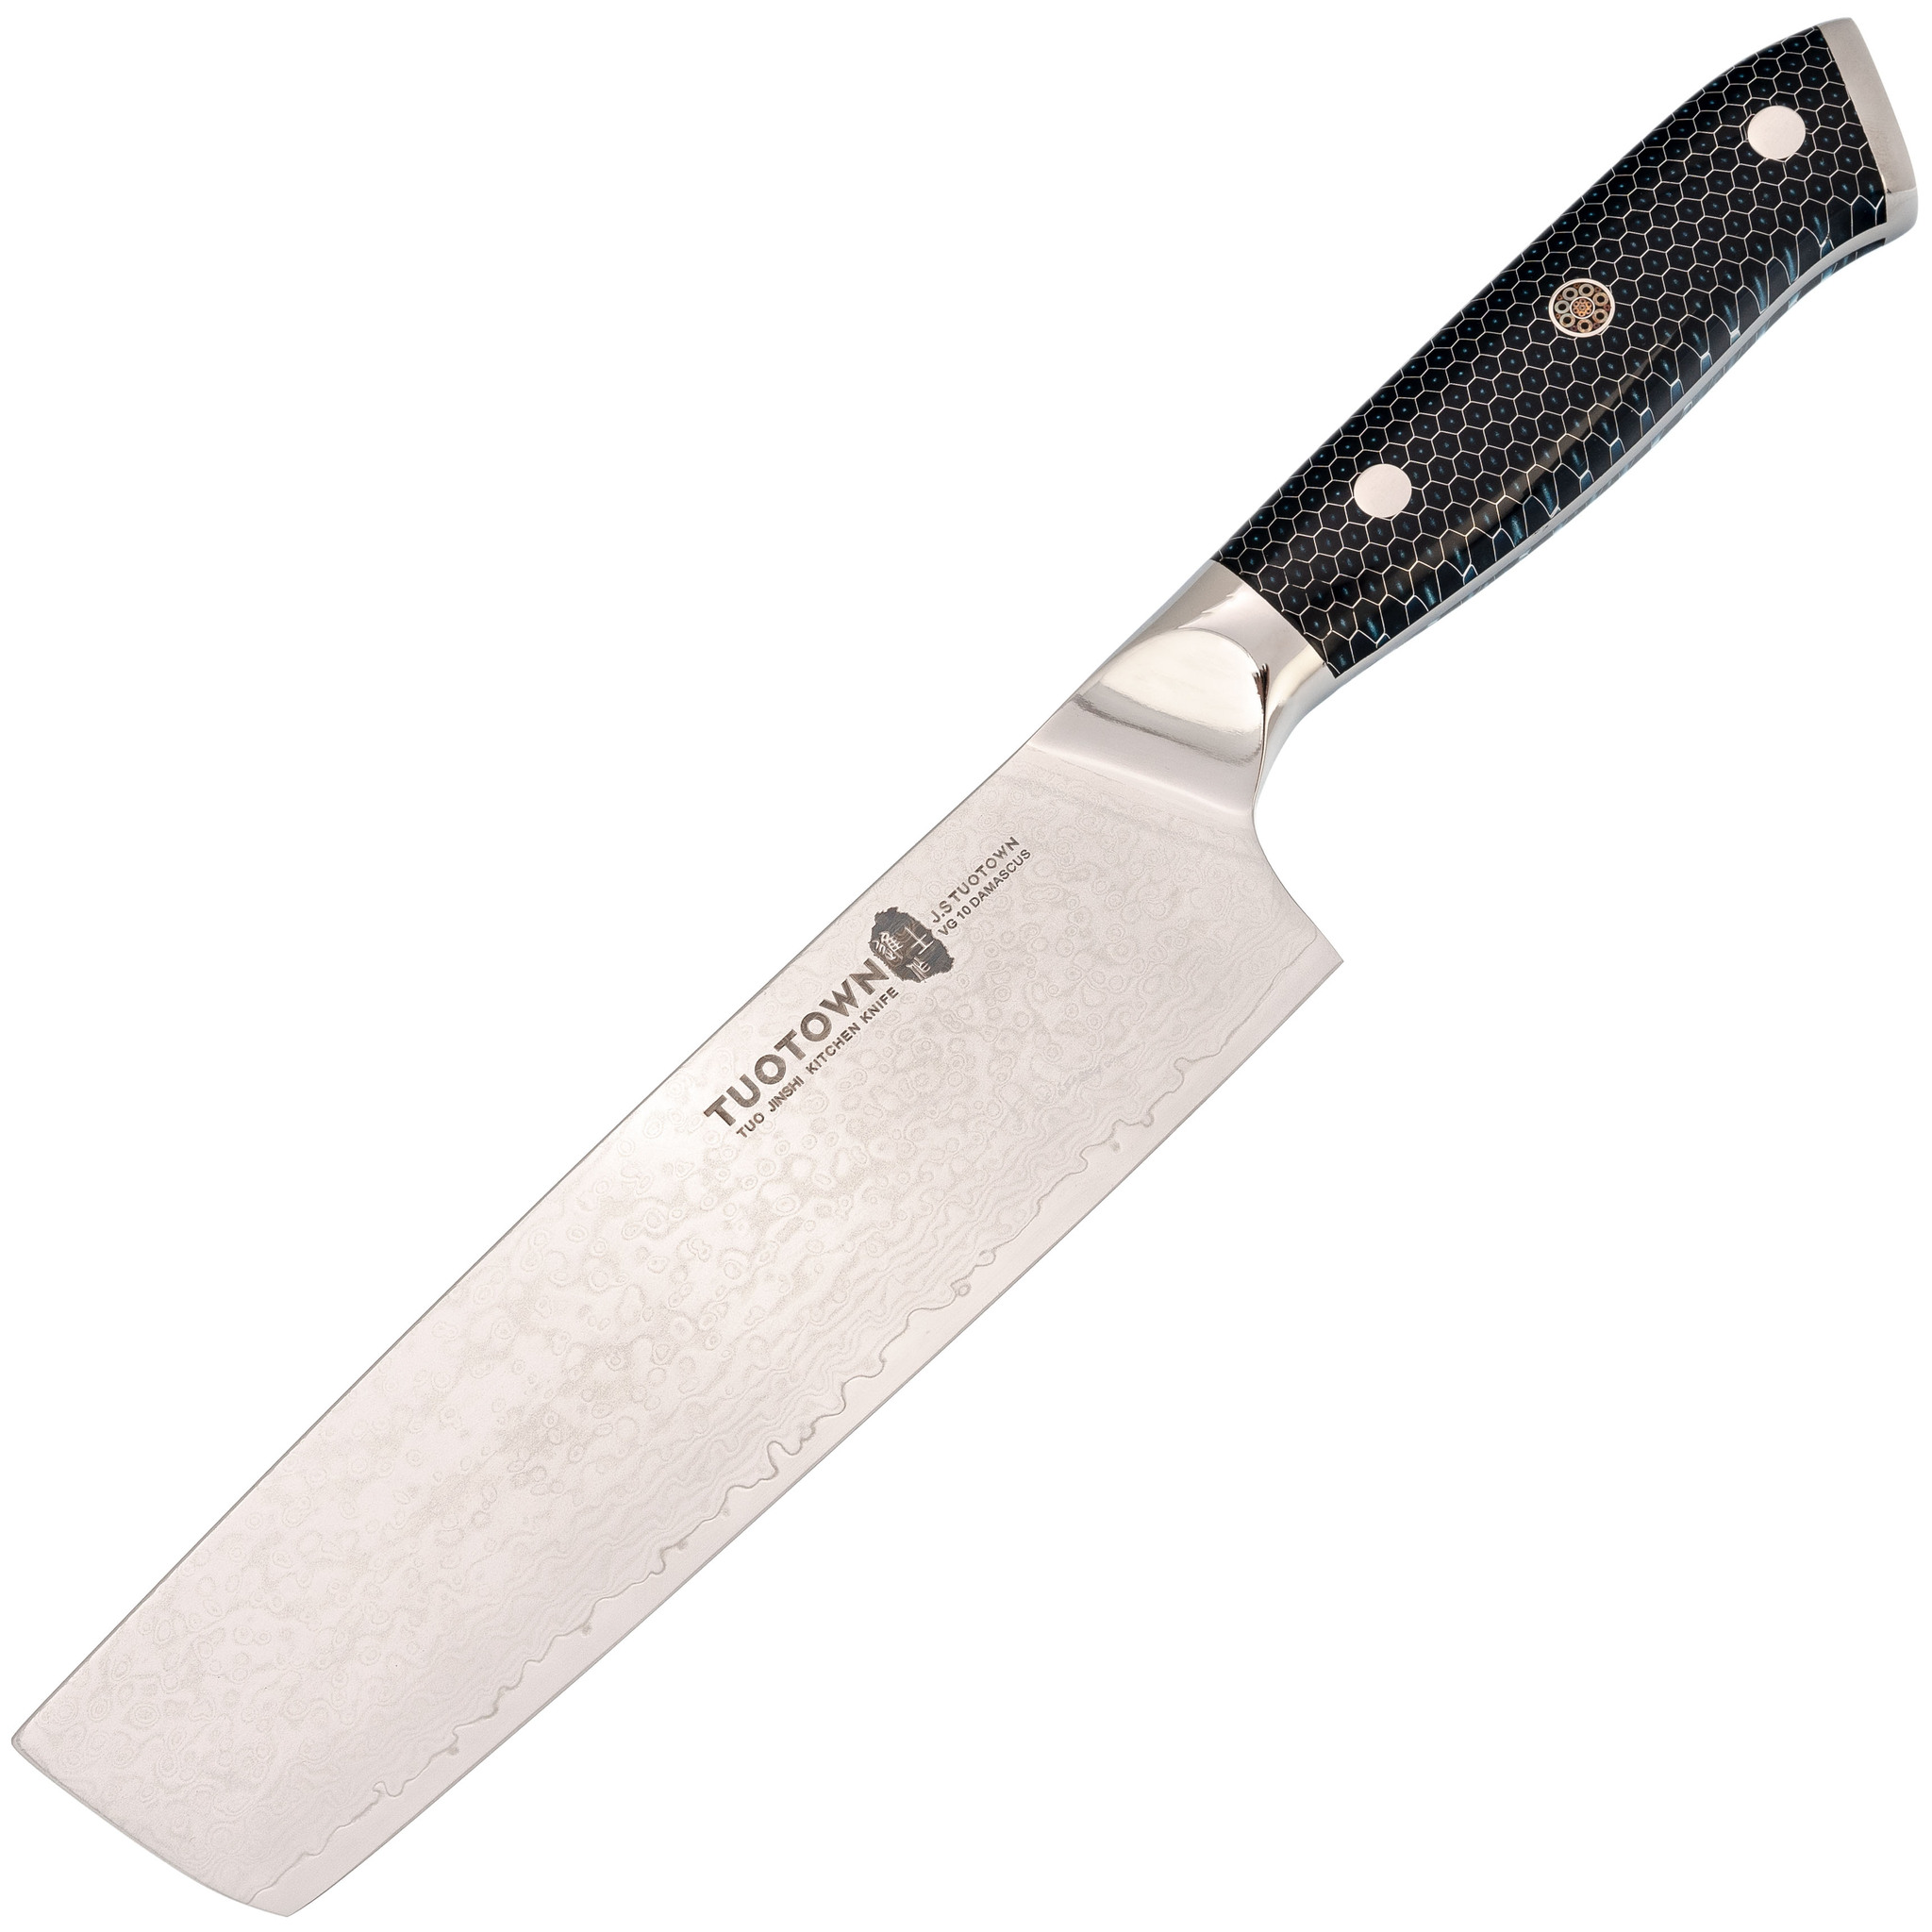 Кухонный нож Накири Tuotown, сталь VG10, обкладка Damascus, рукоять акрил, синий - фото 1